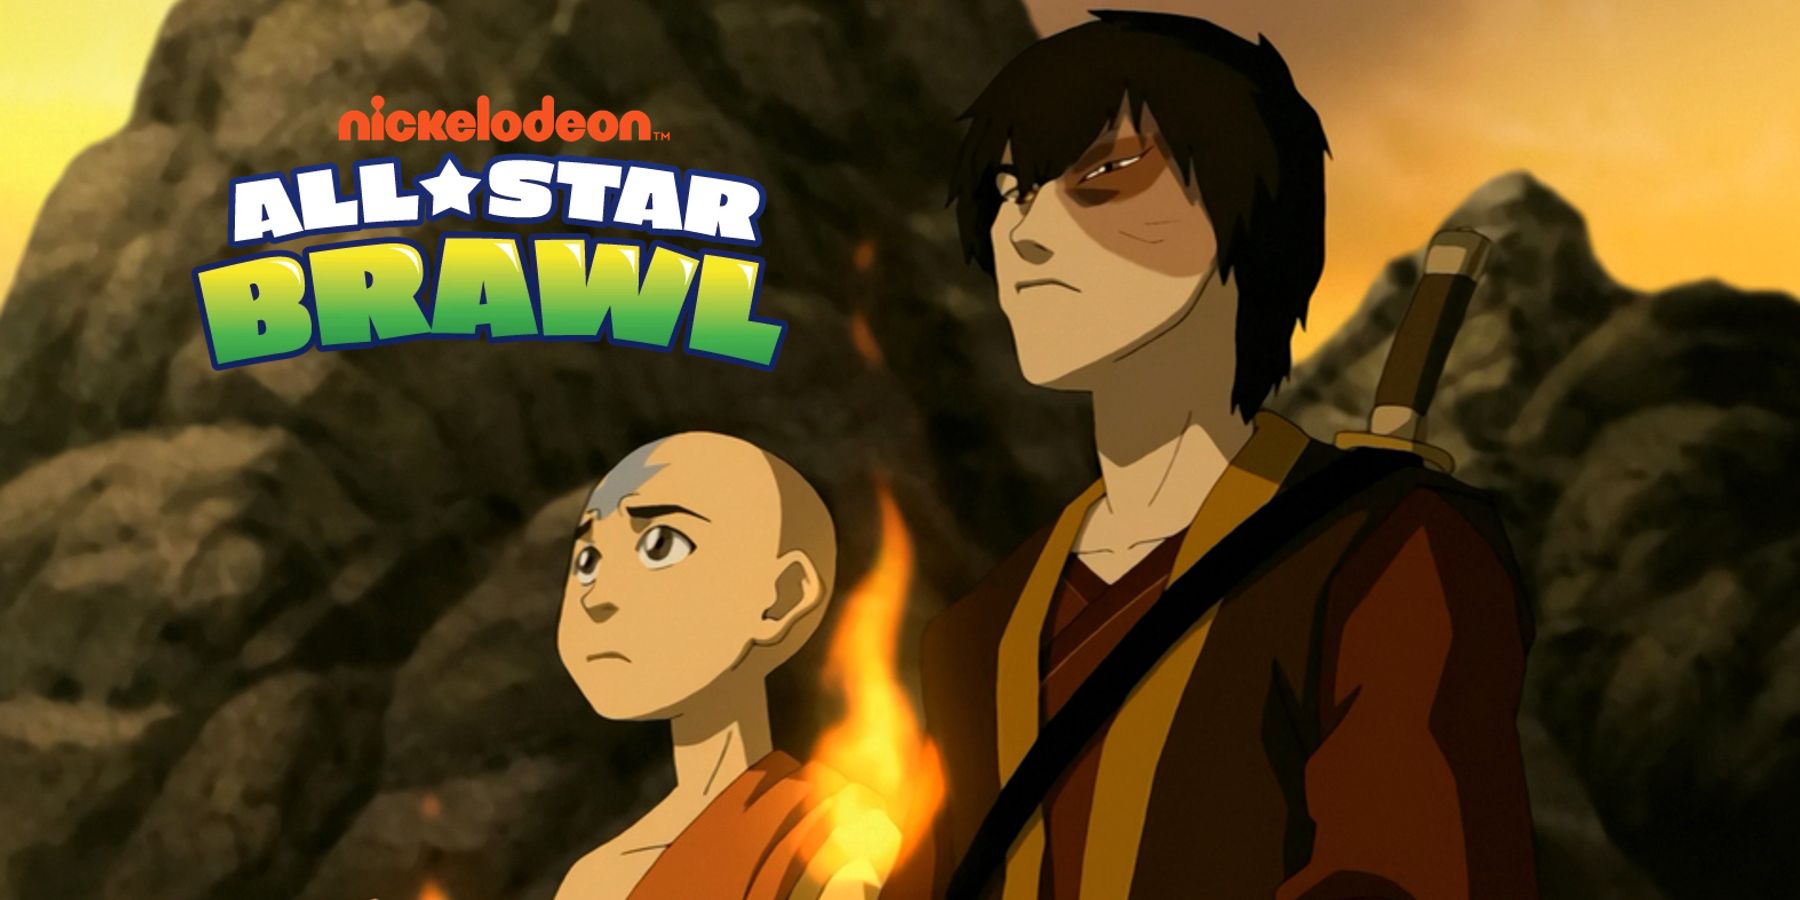 Nickelodeon All-Star Brawl: Prințul Zuko ar completa perfect distribuția avatarului